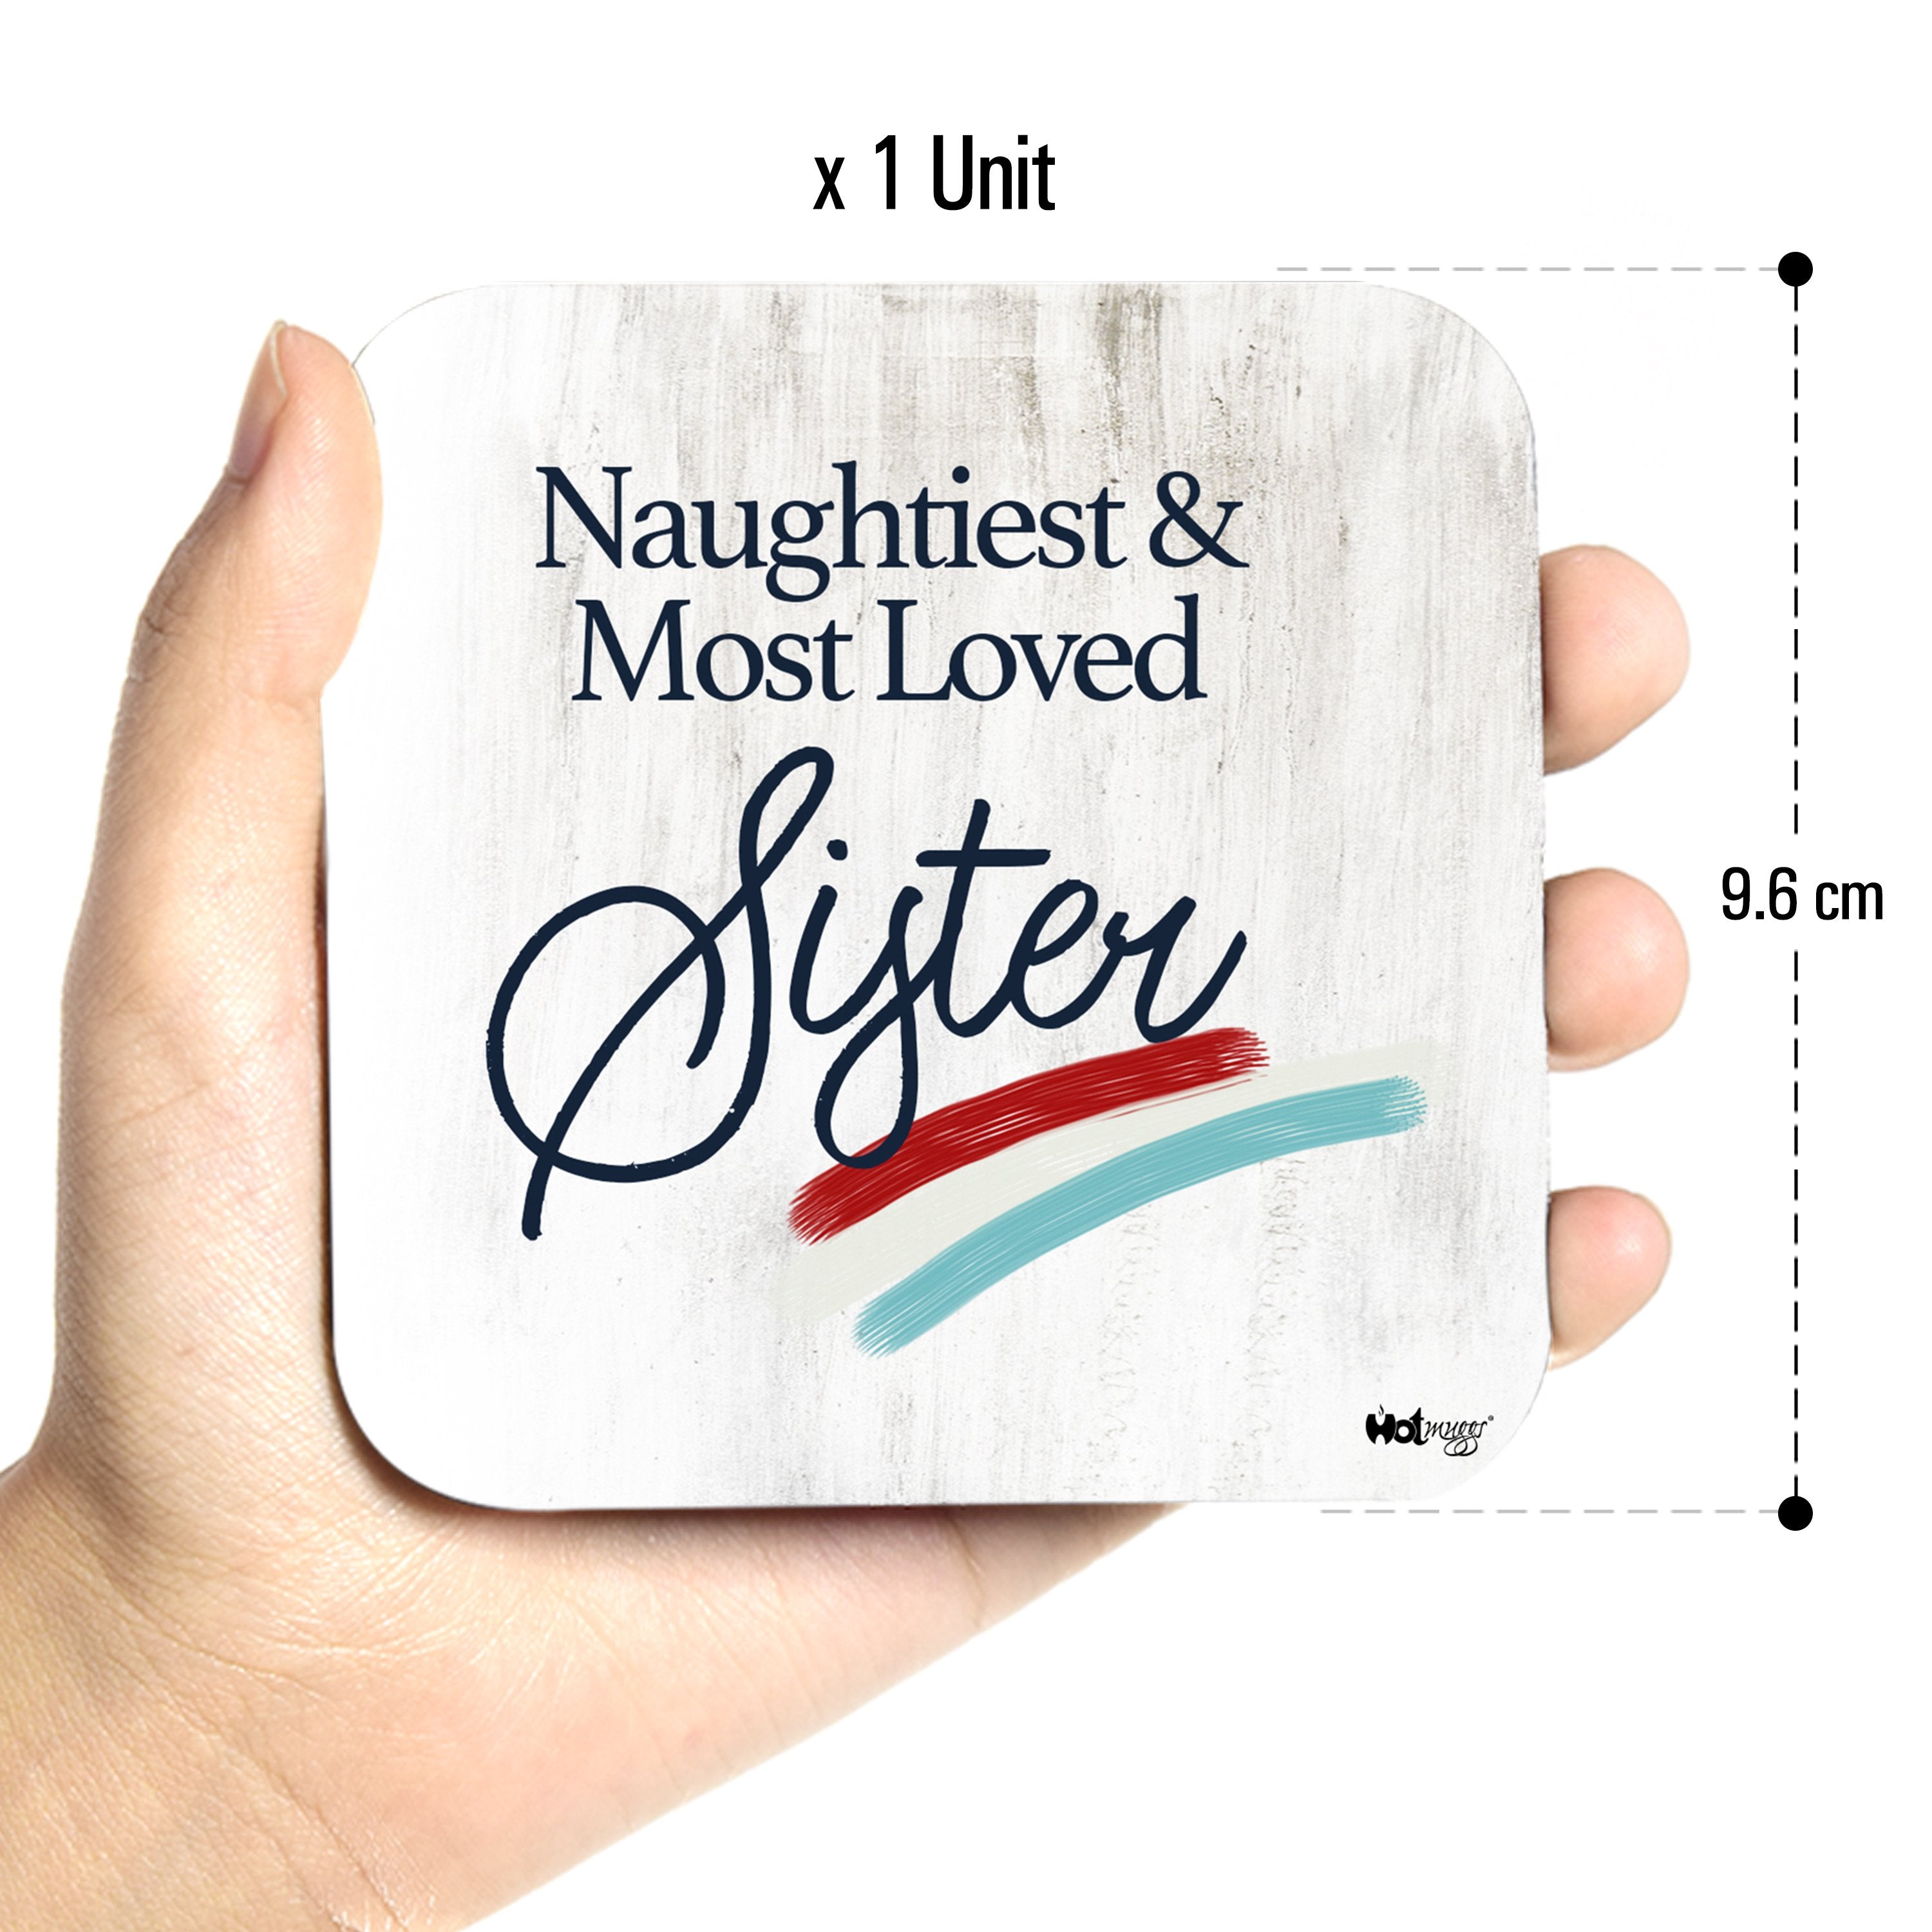 Naughtiest & Most Loved Sister Ceramic Mug & Coasters